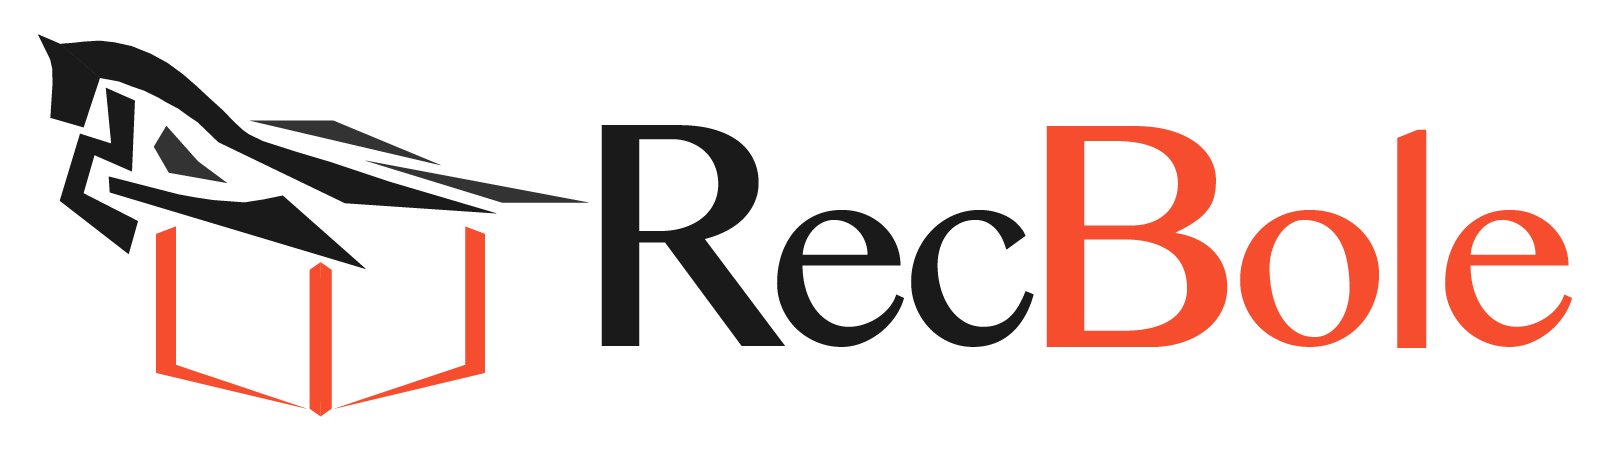 RecBole Logo